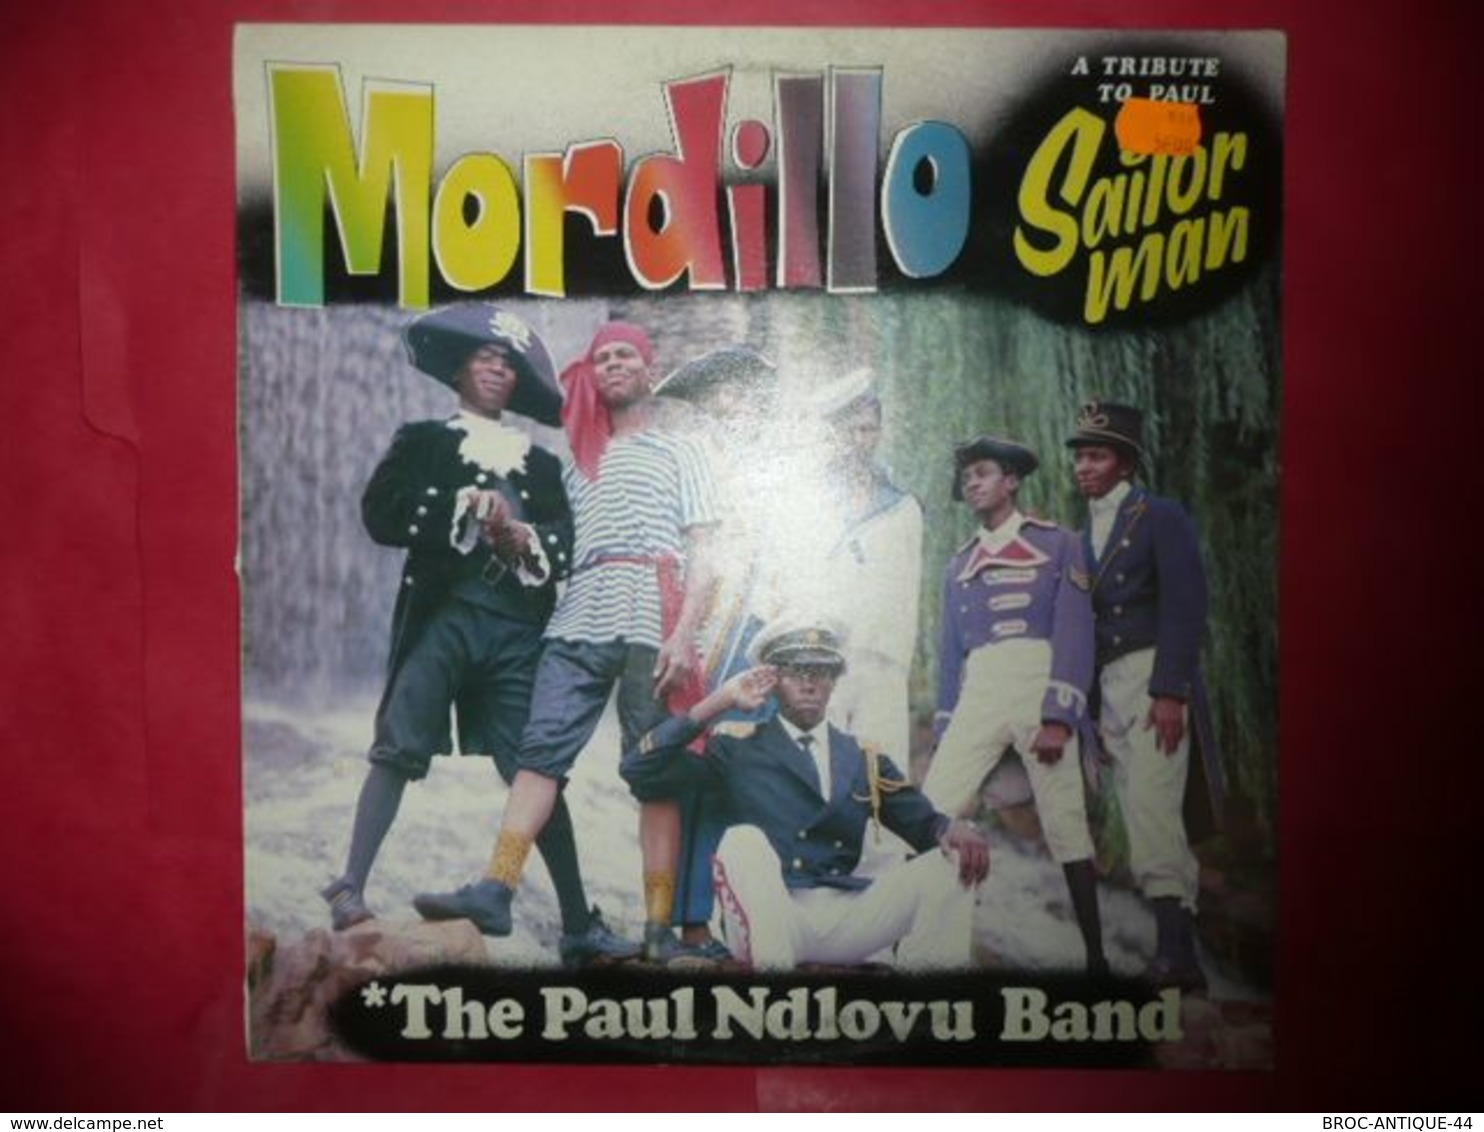 LP33 N°5110 - THE PAUL NDLOVU BAND - MORDILLO - SAILOR MAN - FUNK SOUL BOOGIE - RARE AUCUN A VENDRE - Soul - R&B